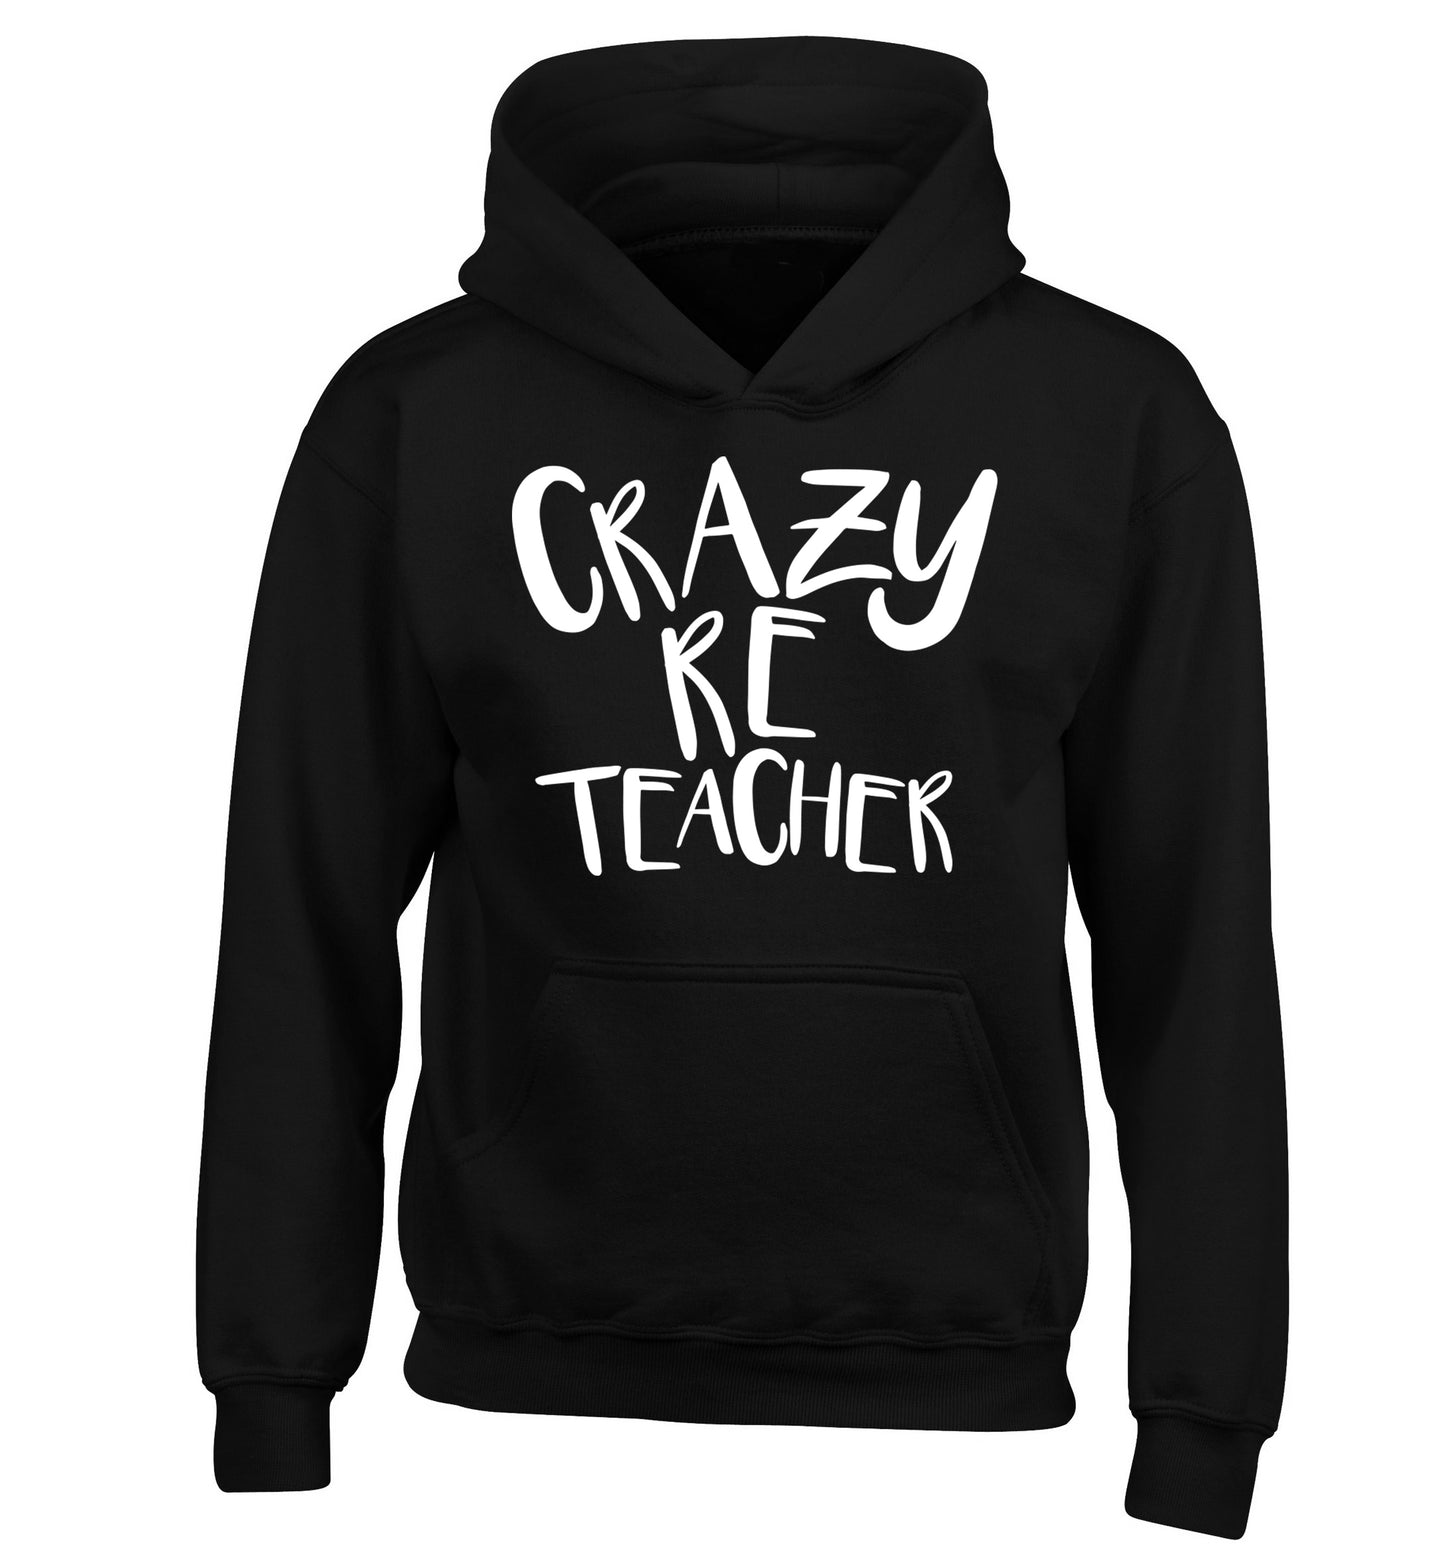 Crazy RE teacher children's black hoodie 12-13 Years